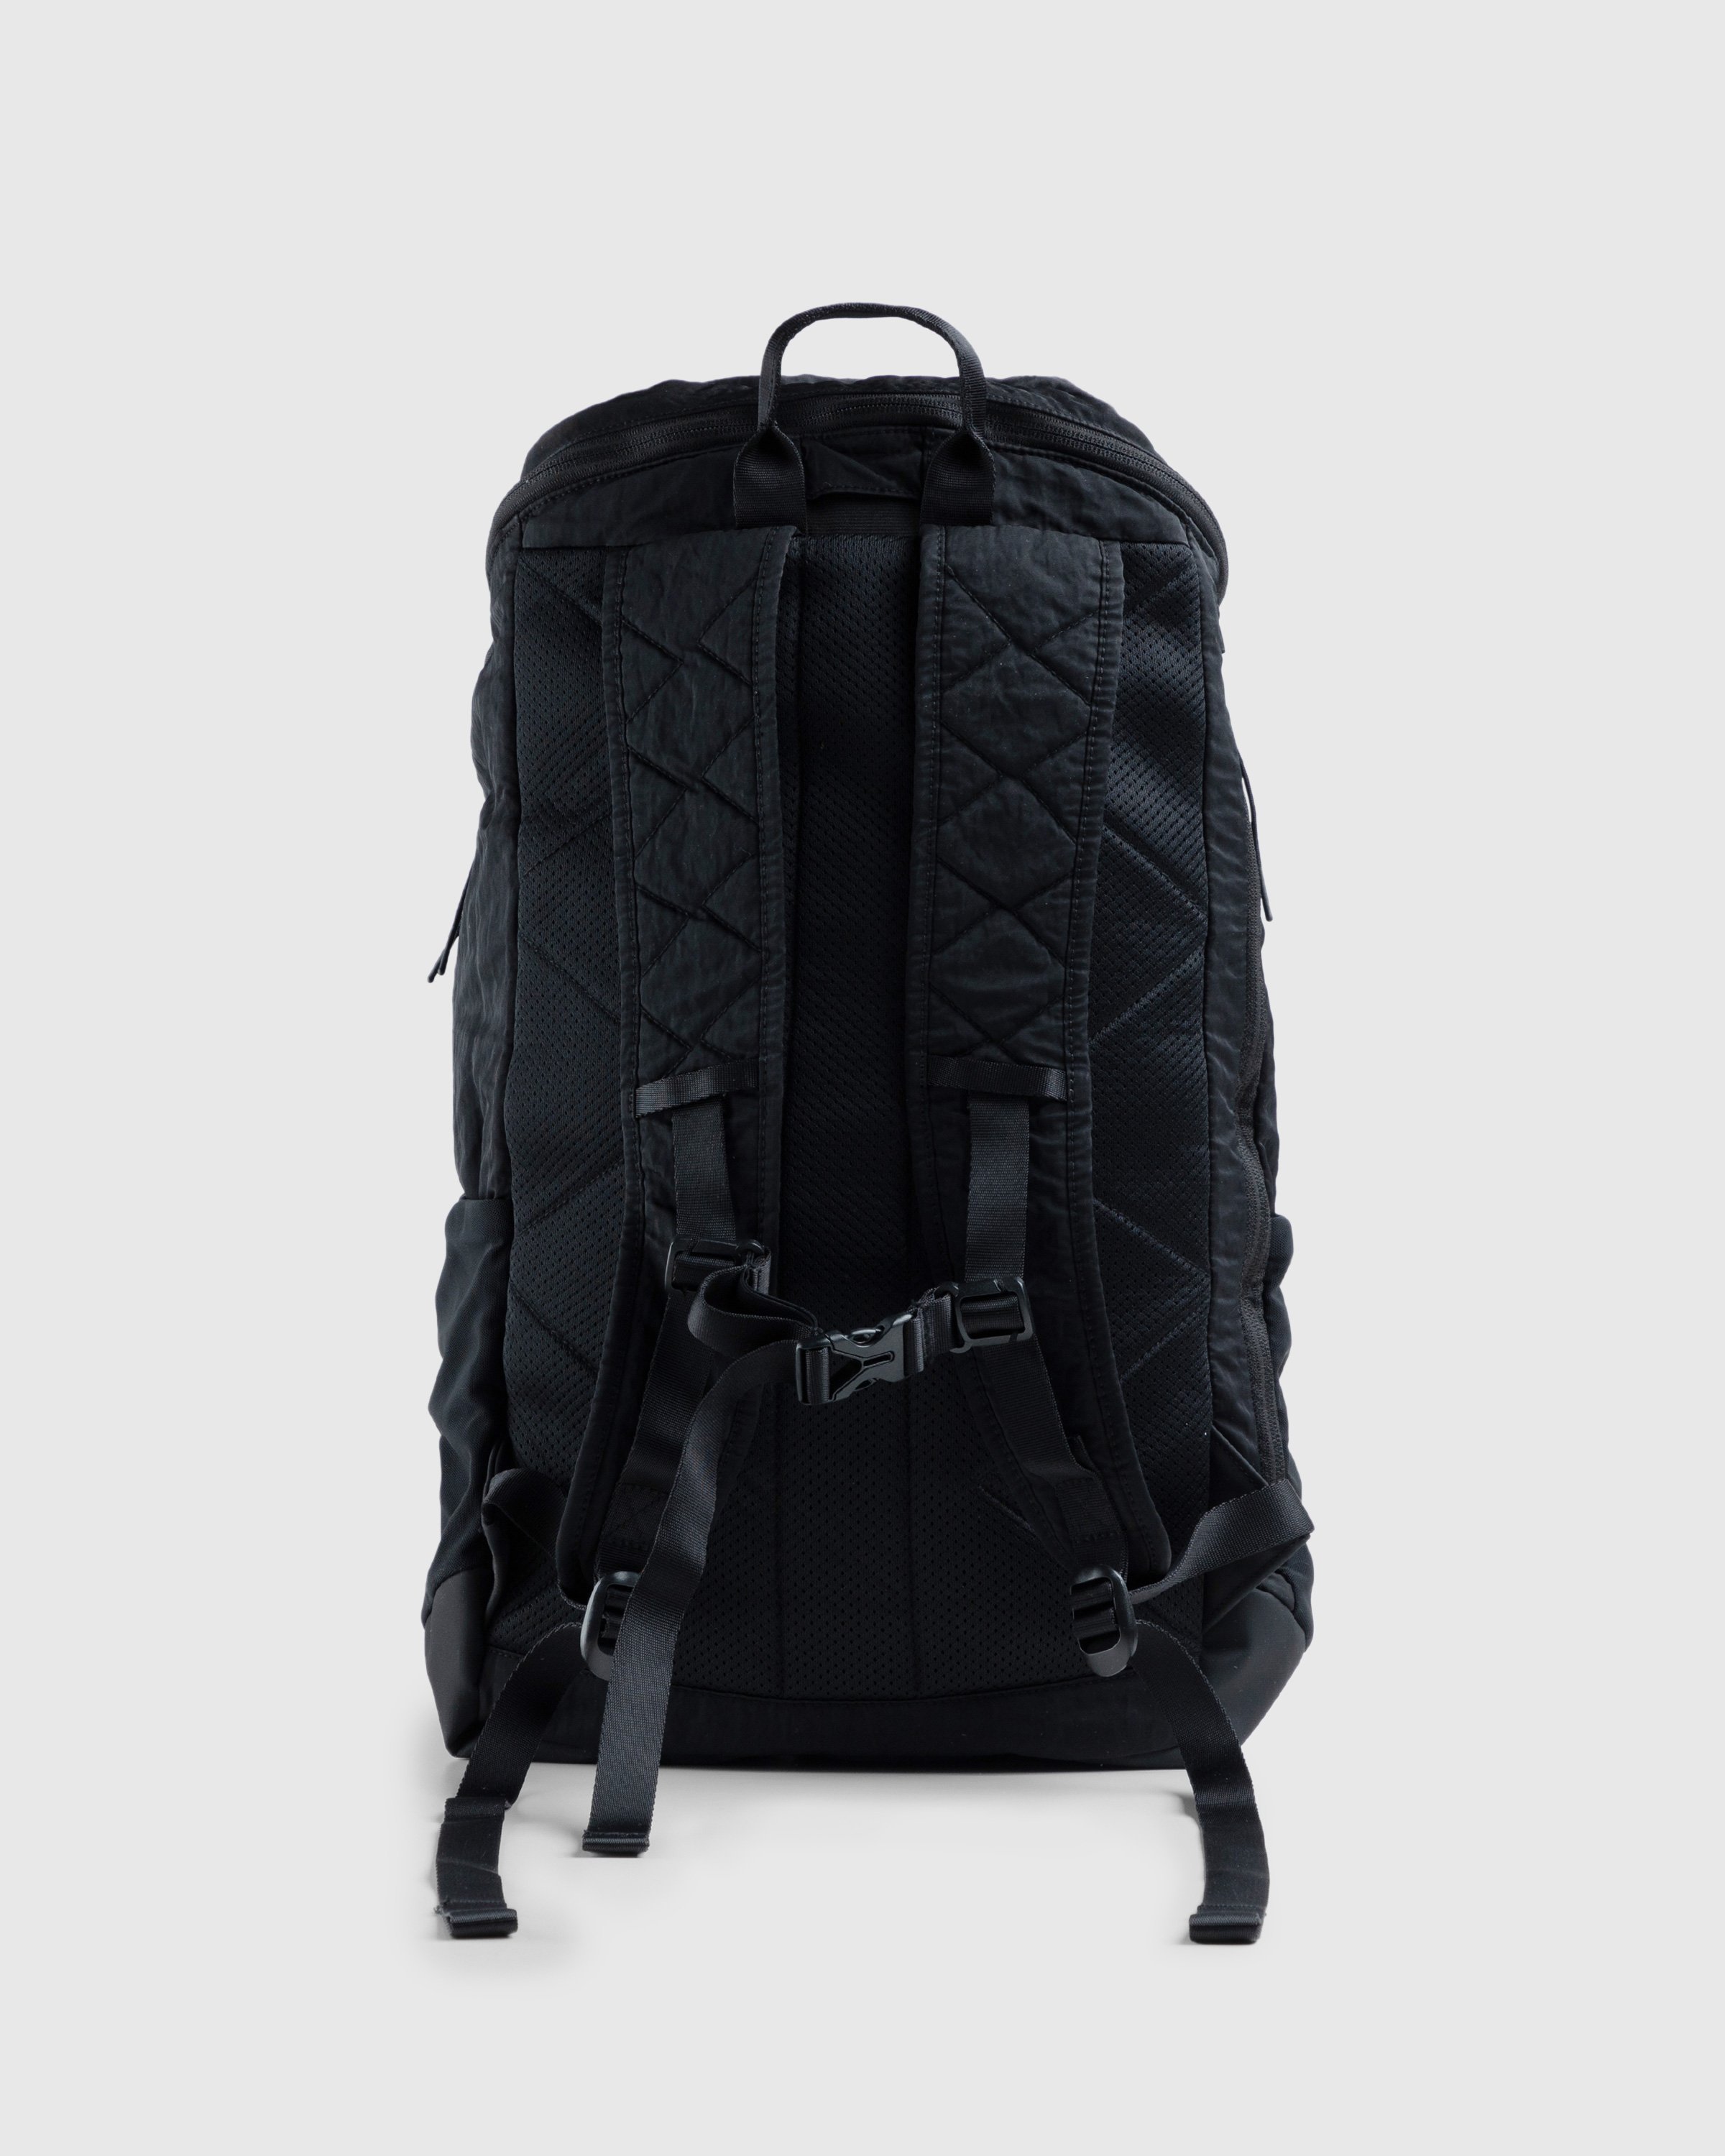 C.P. Company - Nylon B Backpack Black - Accessories - Black - Image 2